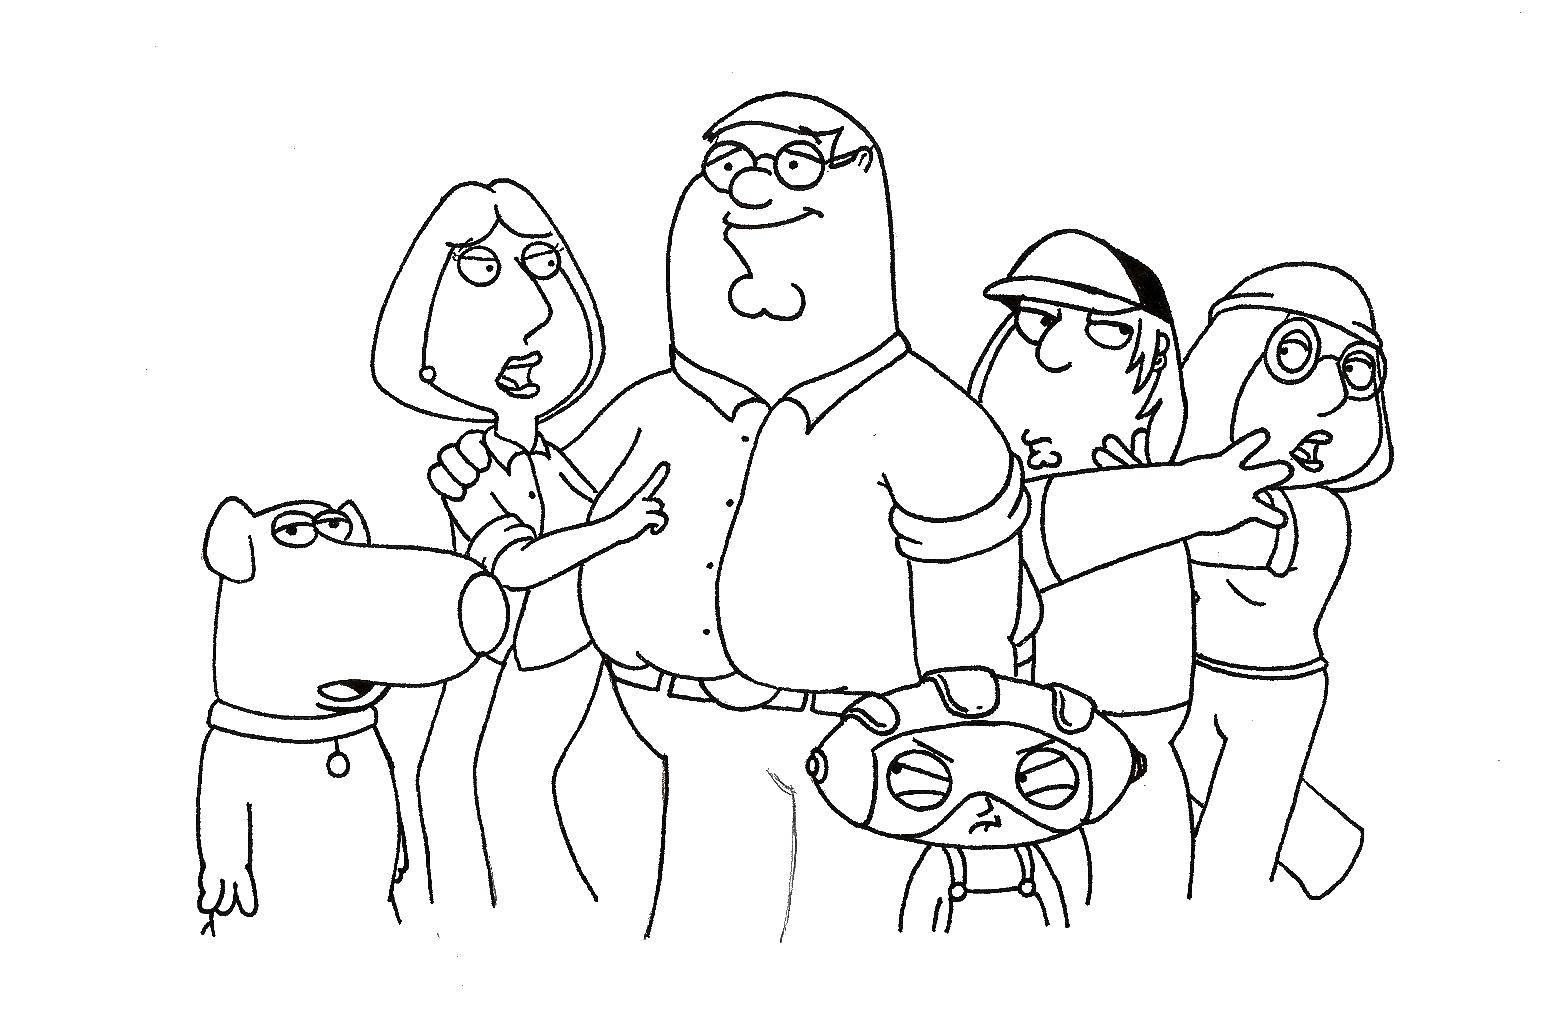 Coloring Family guy. Category Family members. Tags:  Family guy cartoon.